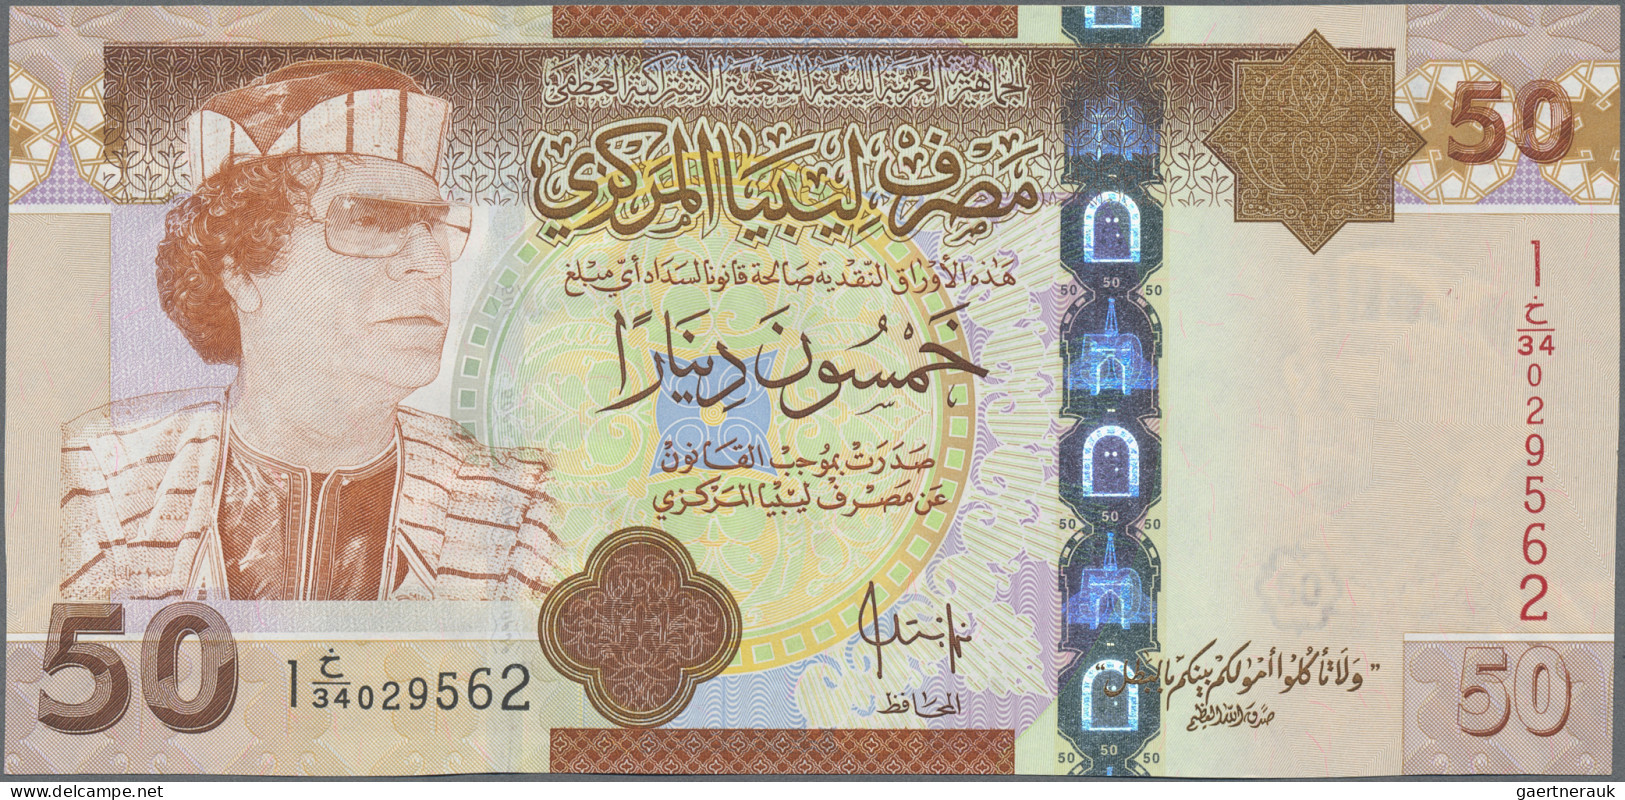 Libya: Central Bank of Libya, huge lot with 34 banknotes, series 1981-2015, comp